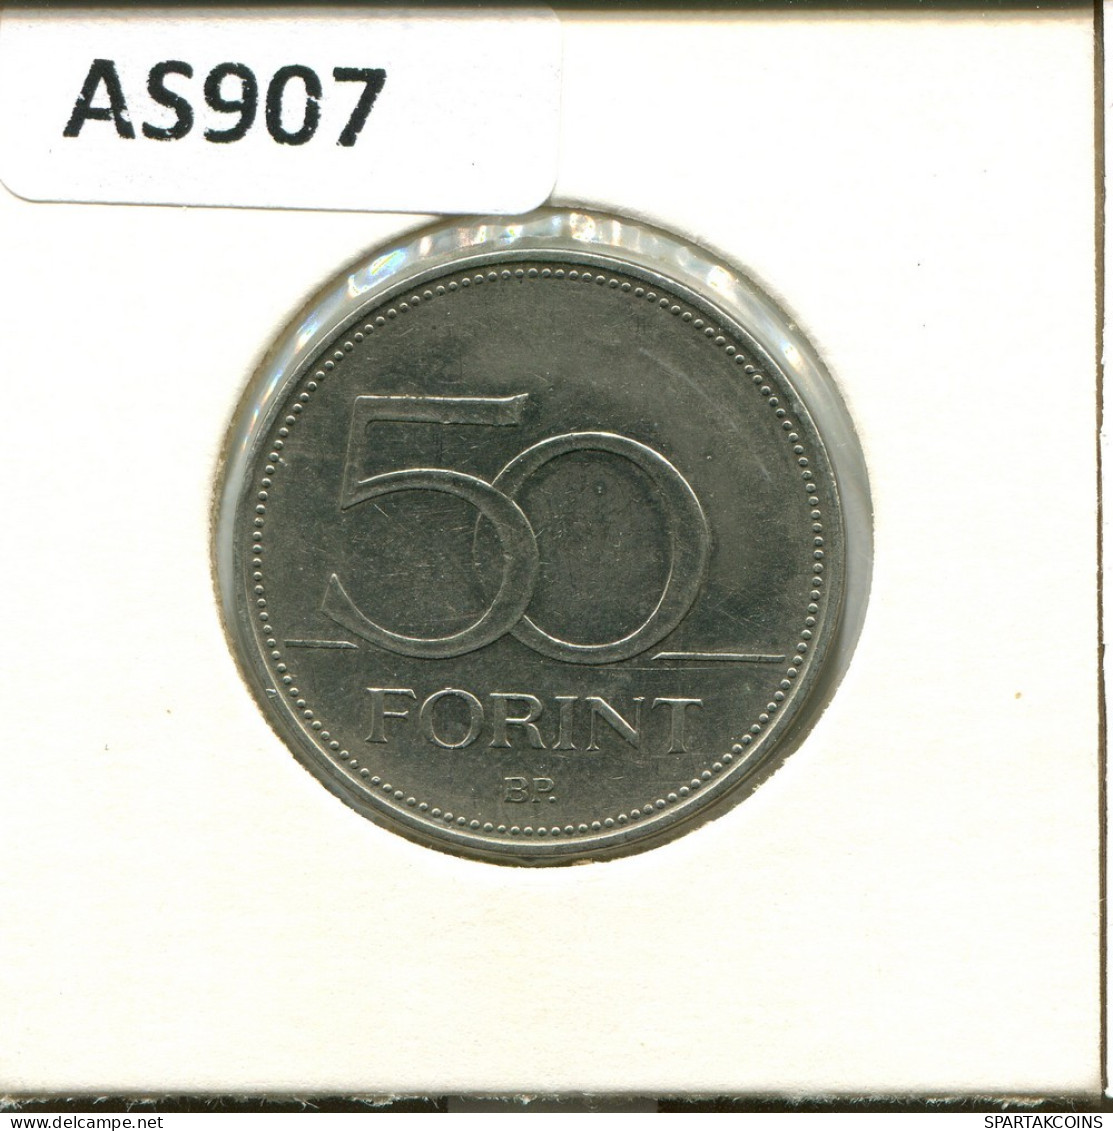 50 FORINT 1995 HUNGARY Coin #AS907.U.A - Hungary